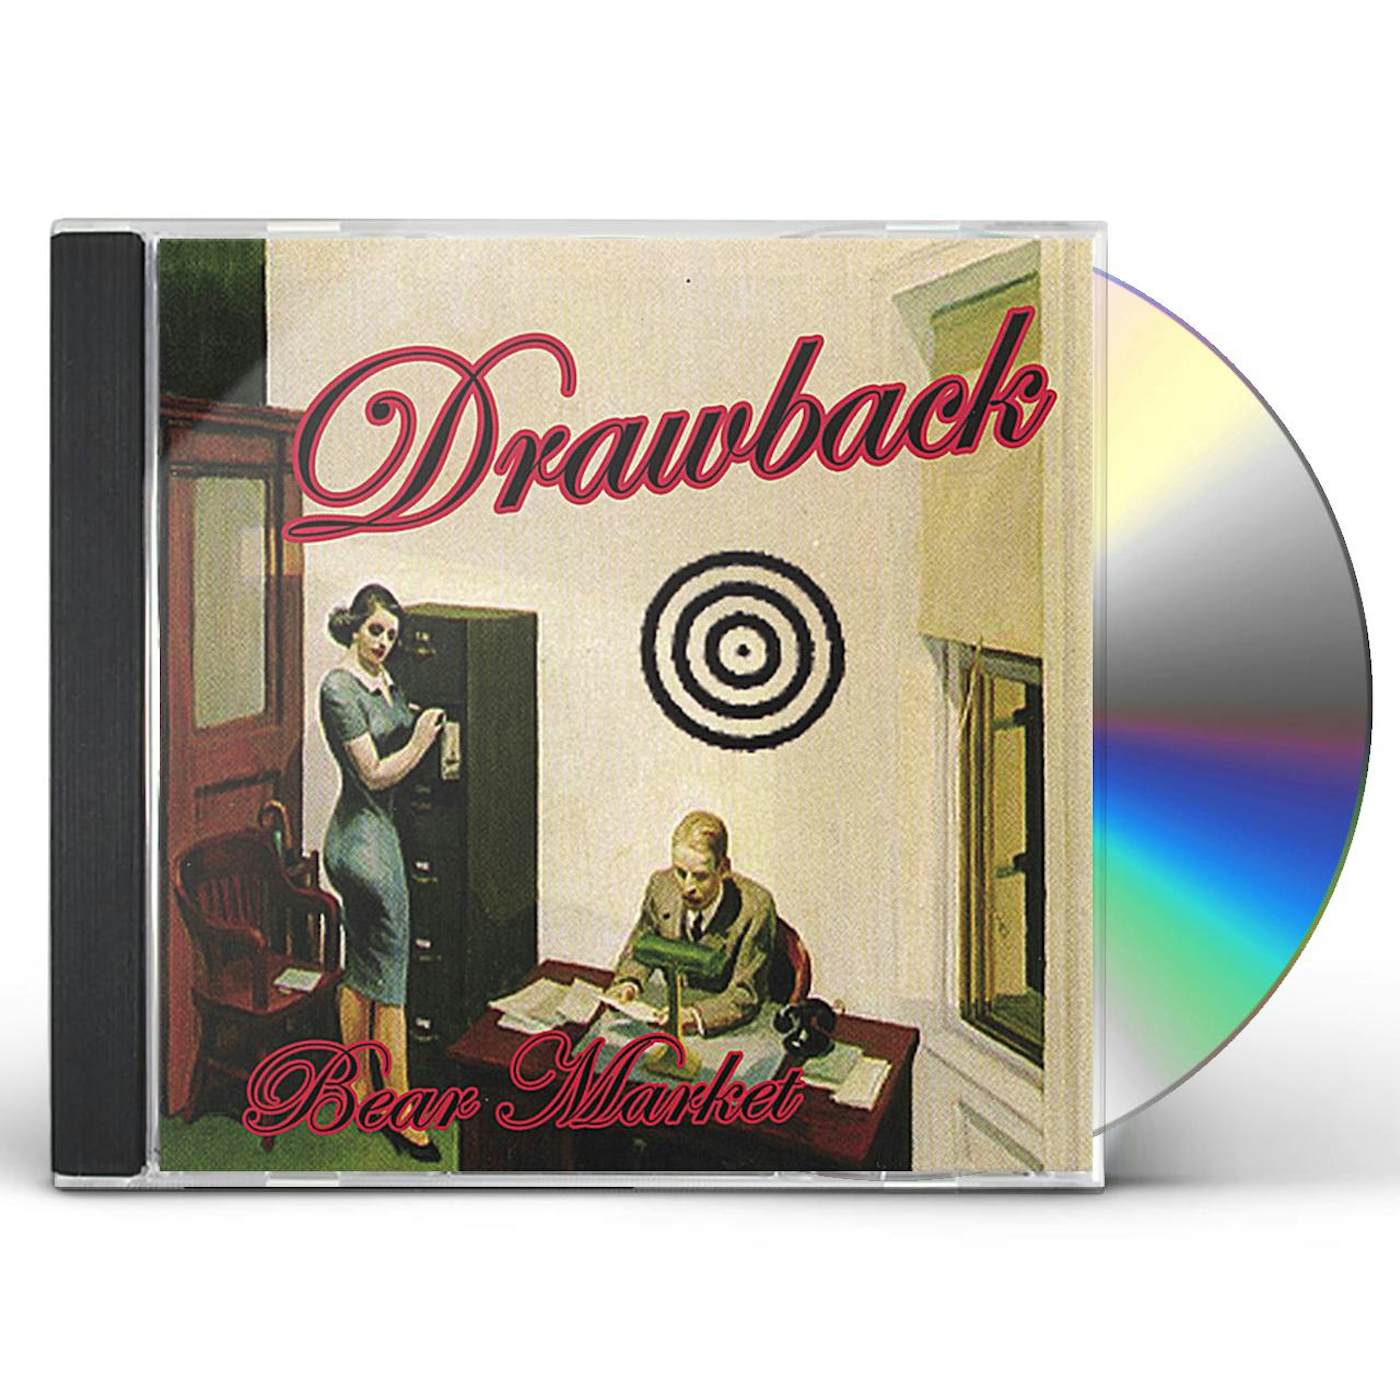 Drawback BEAR MARKET CD